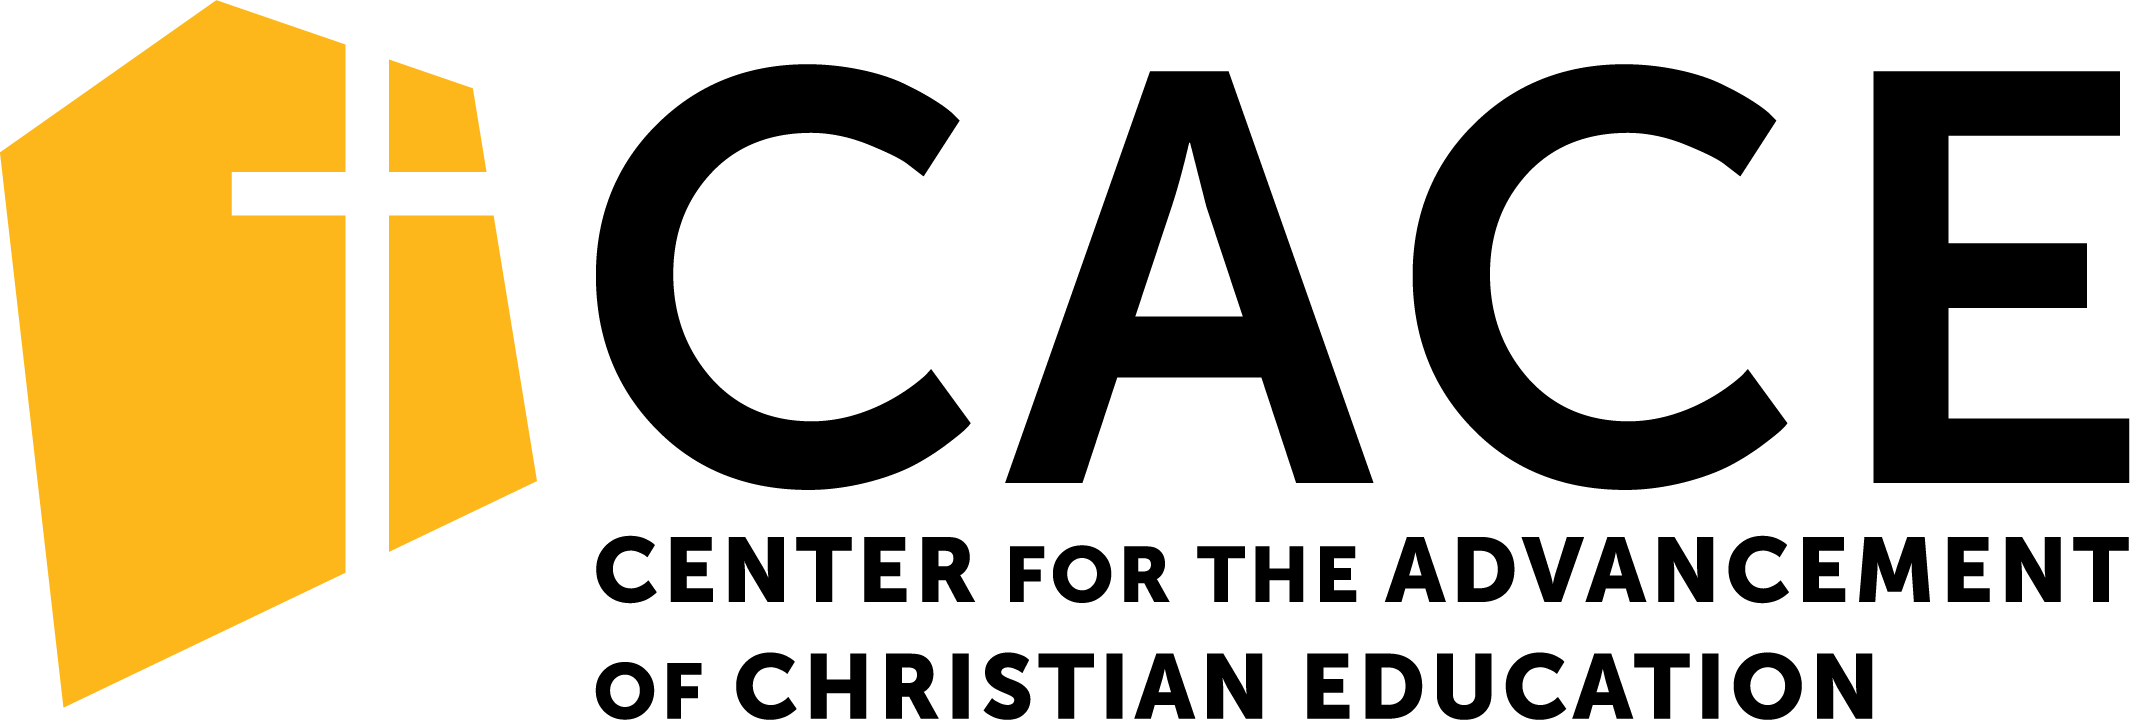 Accreditation Logo 4